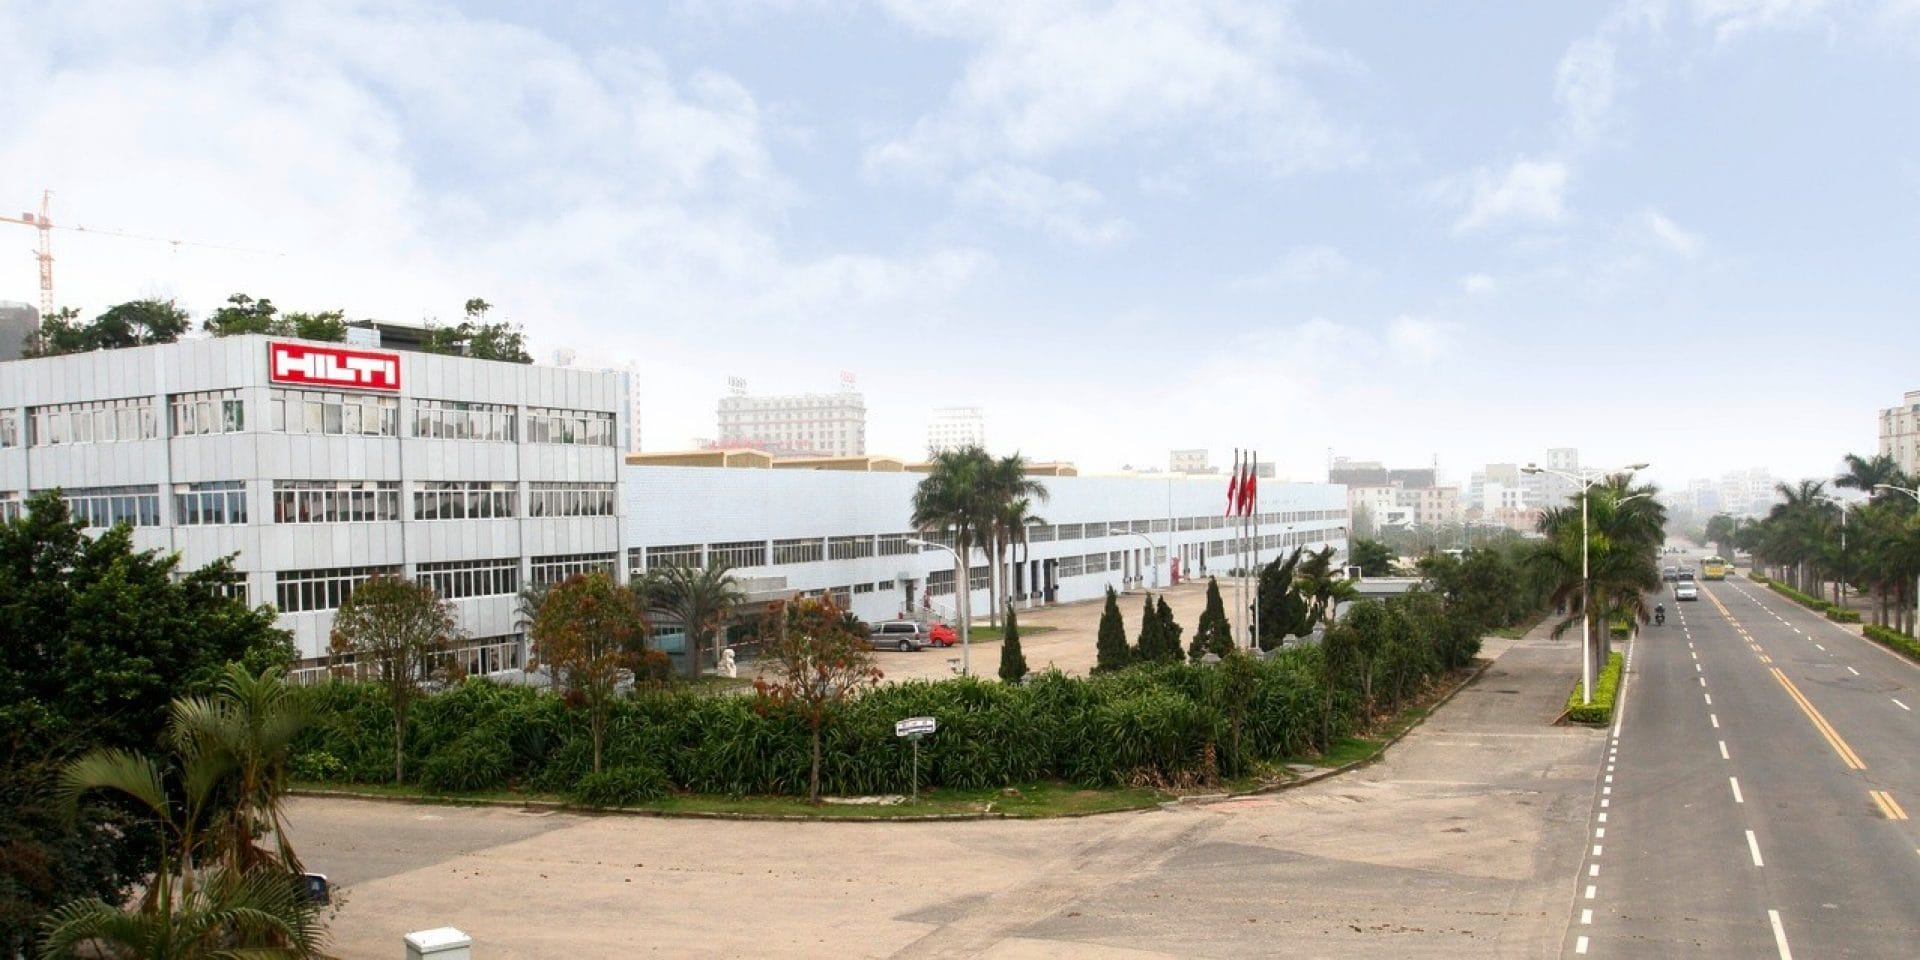 Fábrica da Hilti em Zhanjiang, na China